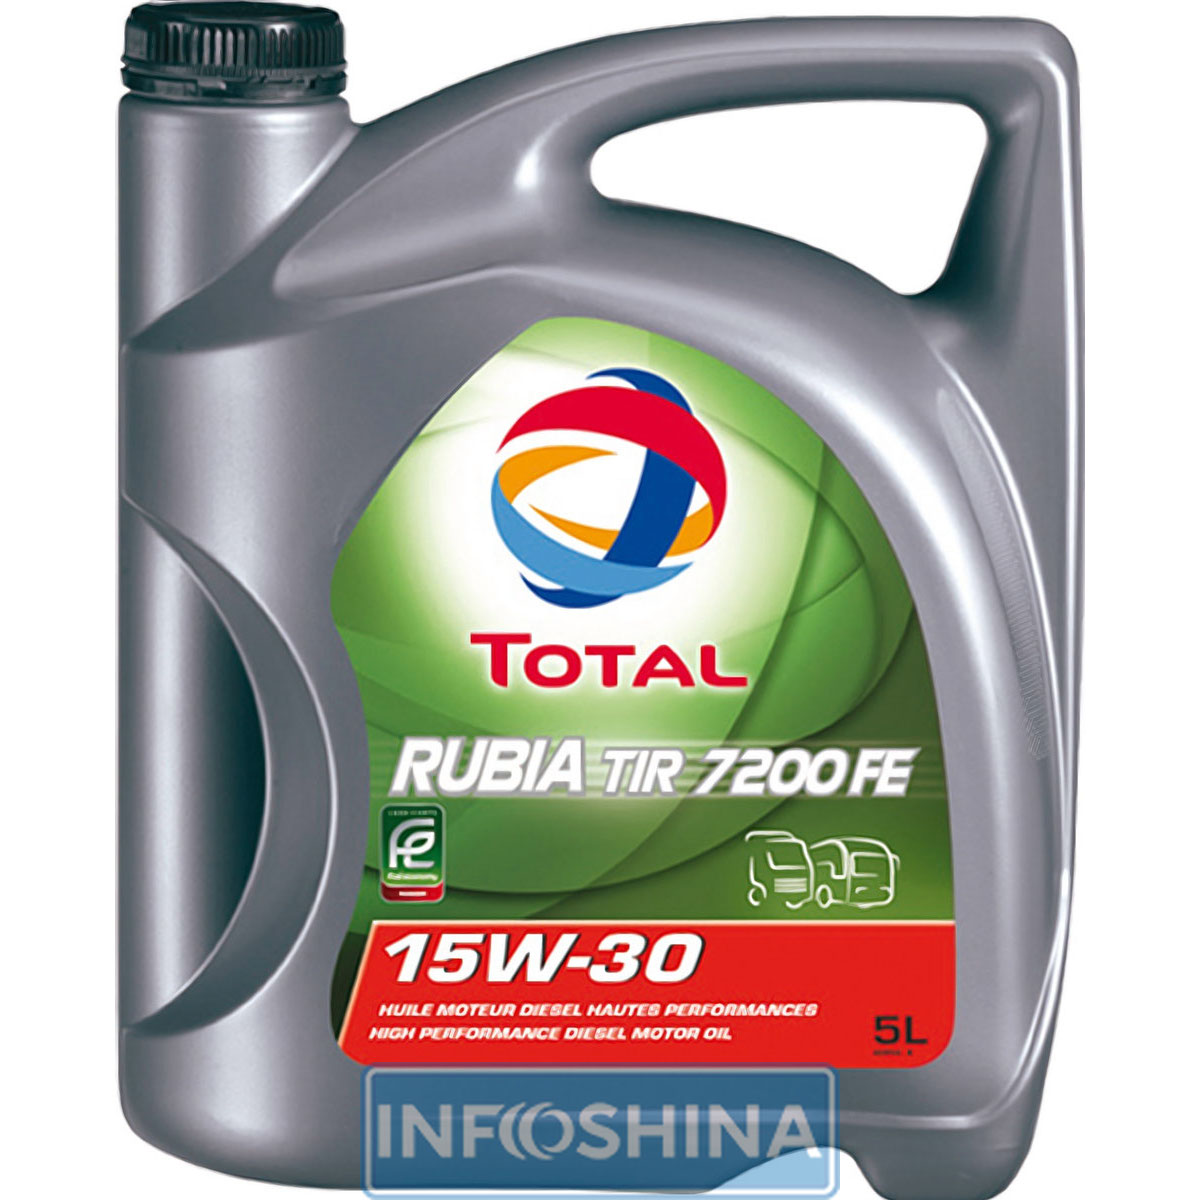 Купить масло Total Rubia TIR 7200 FE